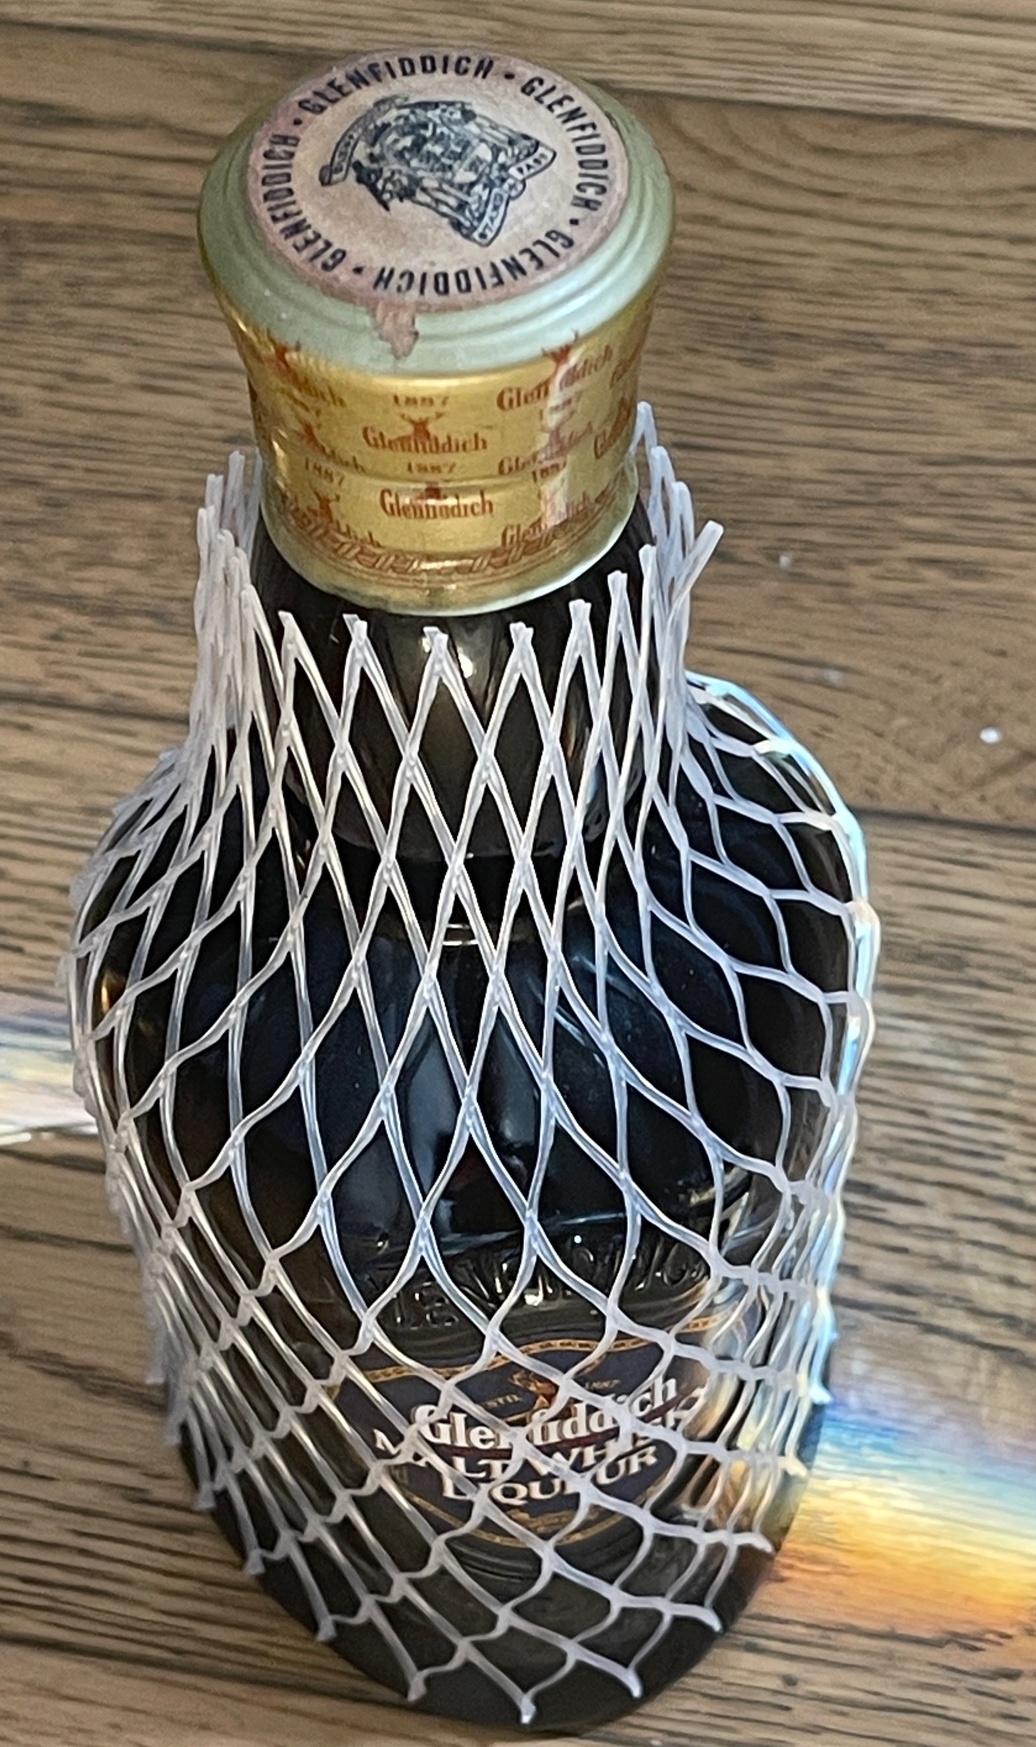 Bottle of Glenfiddich Malt Whisky Liquer - Bottle 4 of 5. - Image 5 of 5